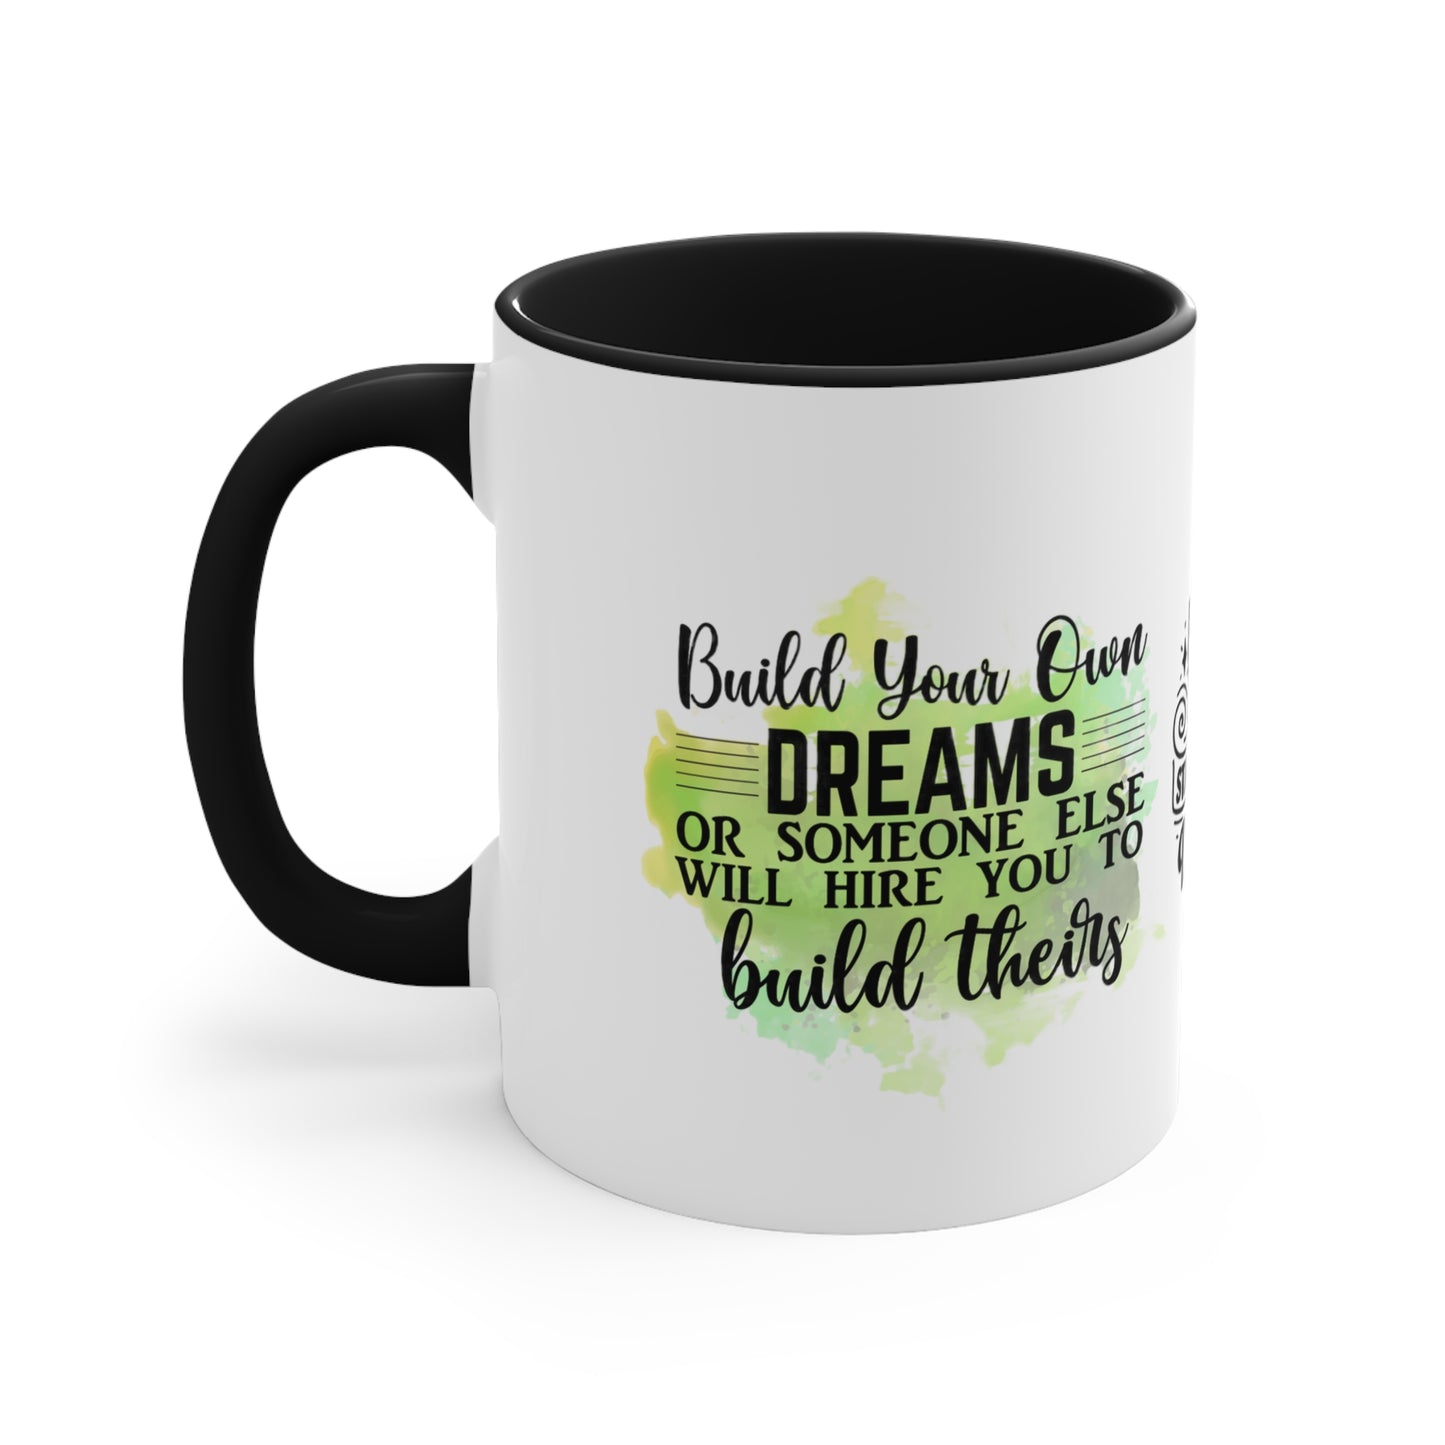 EVERYTHING STARTS with a DREAM Mug - Inspirational Mugs - Mugscity - Free Shipping